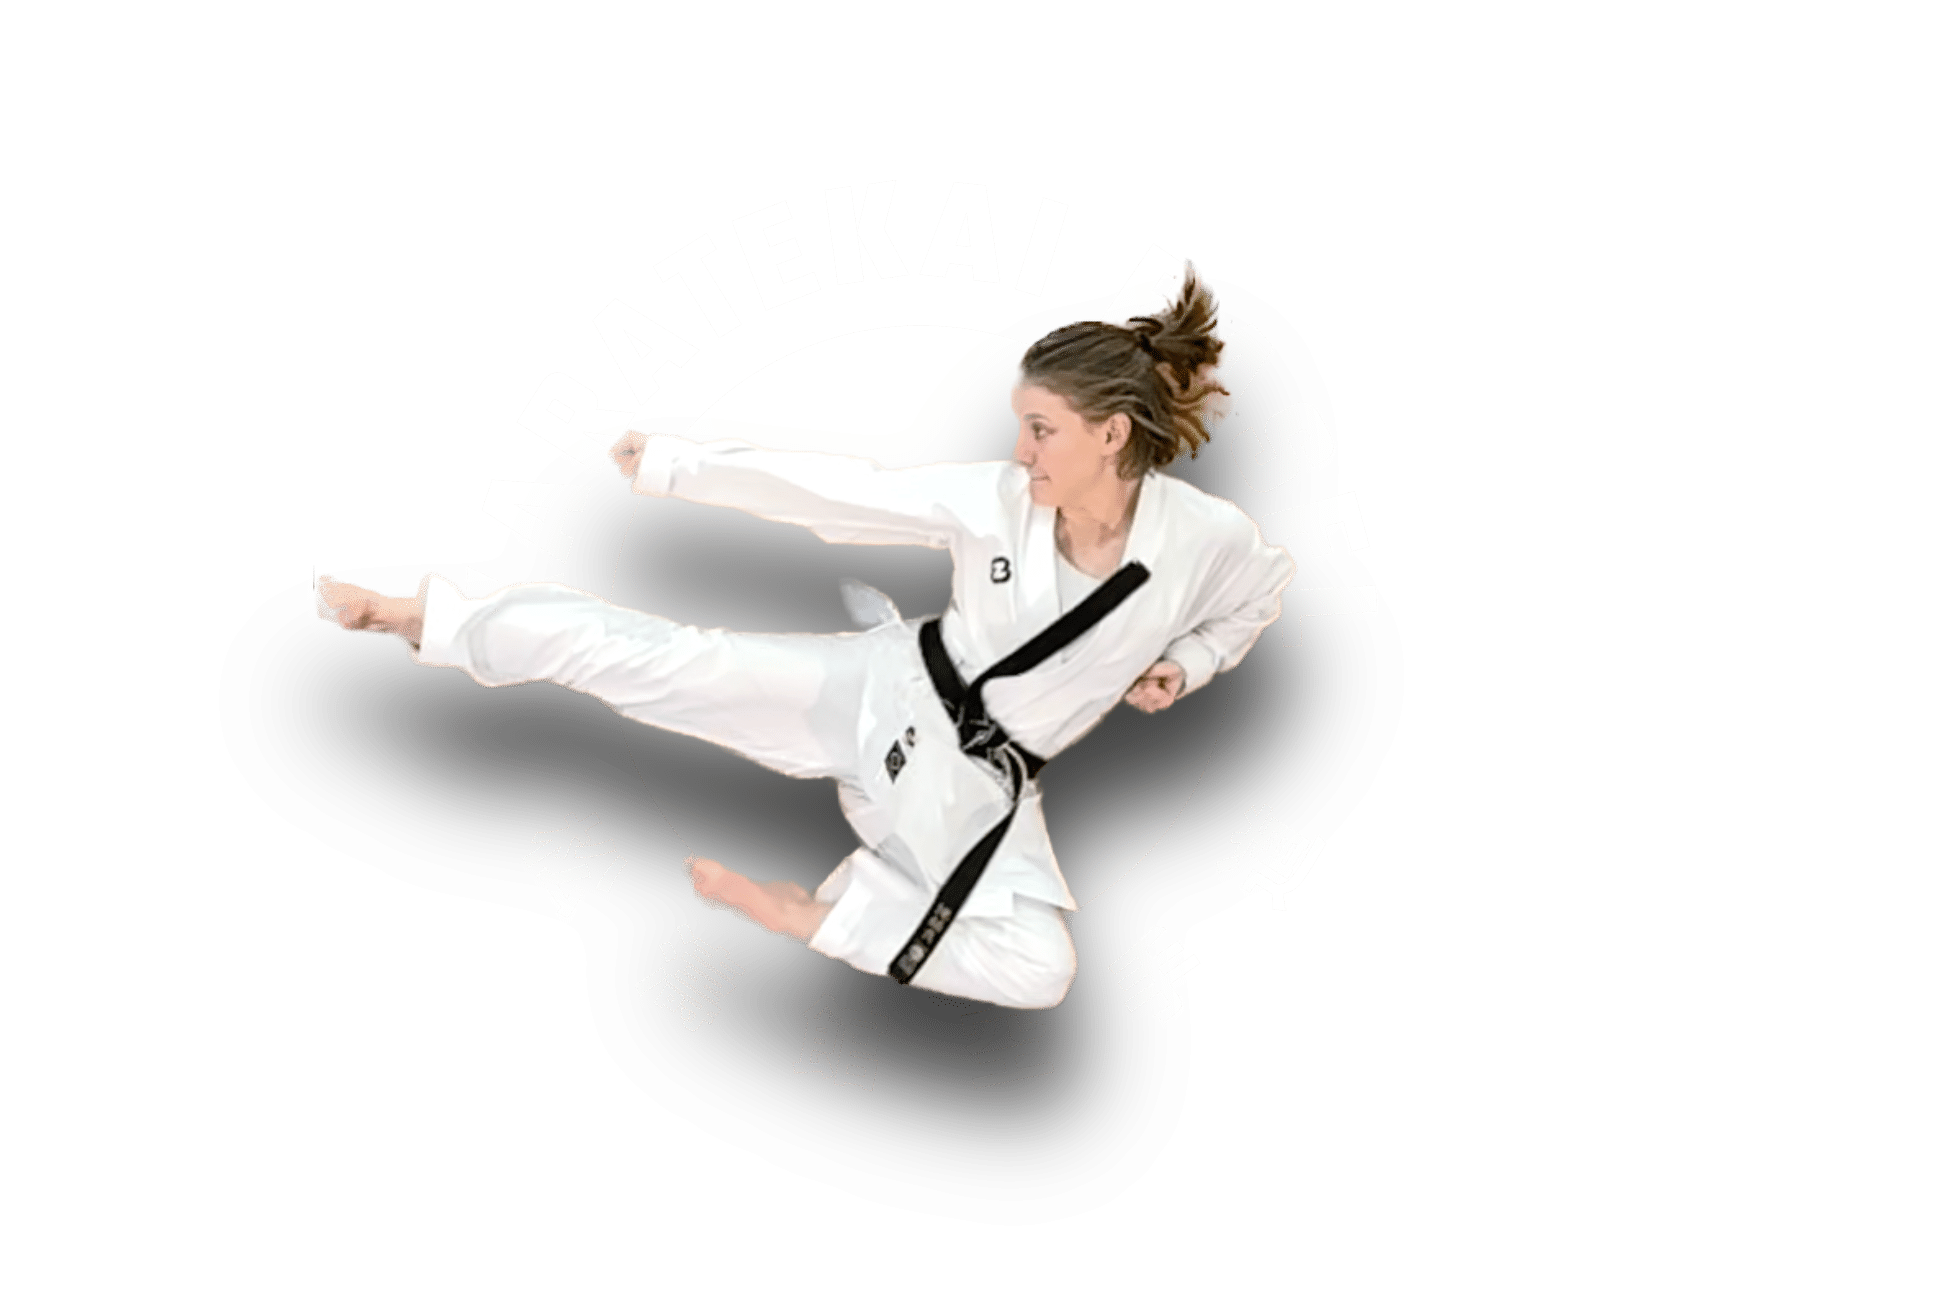 Karatekai Basel